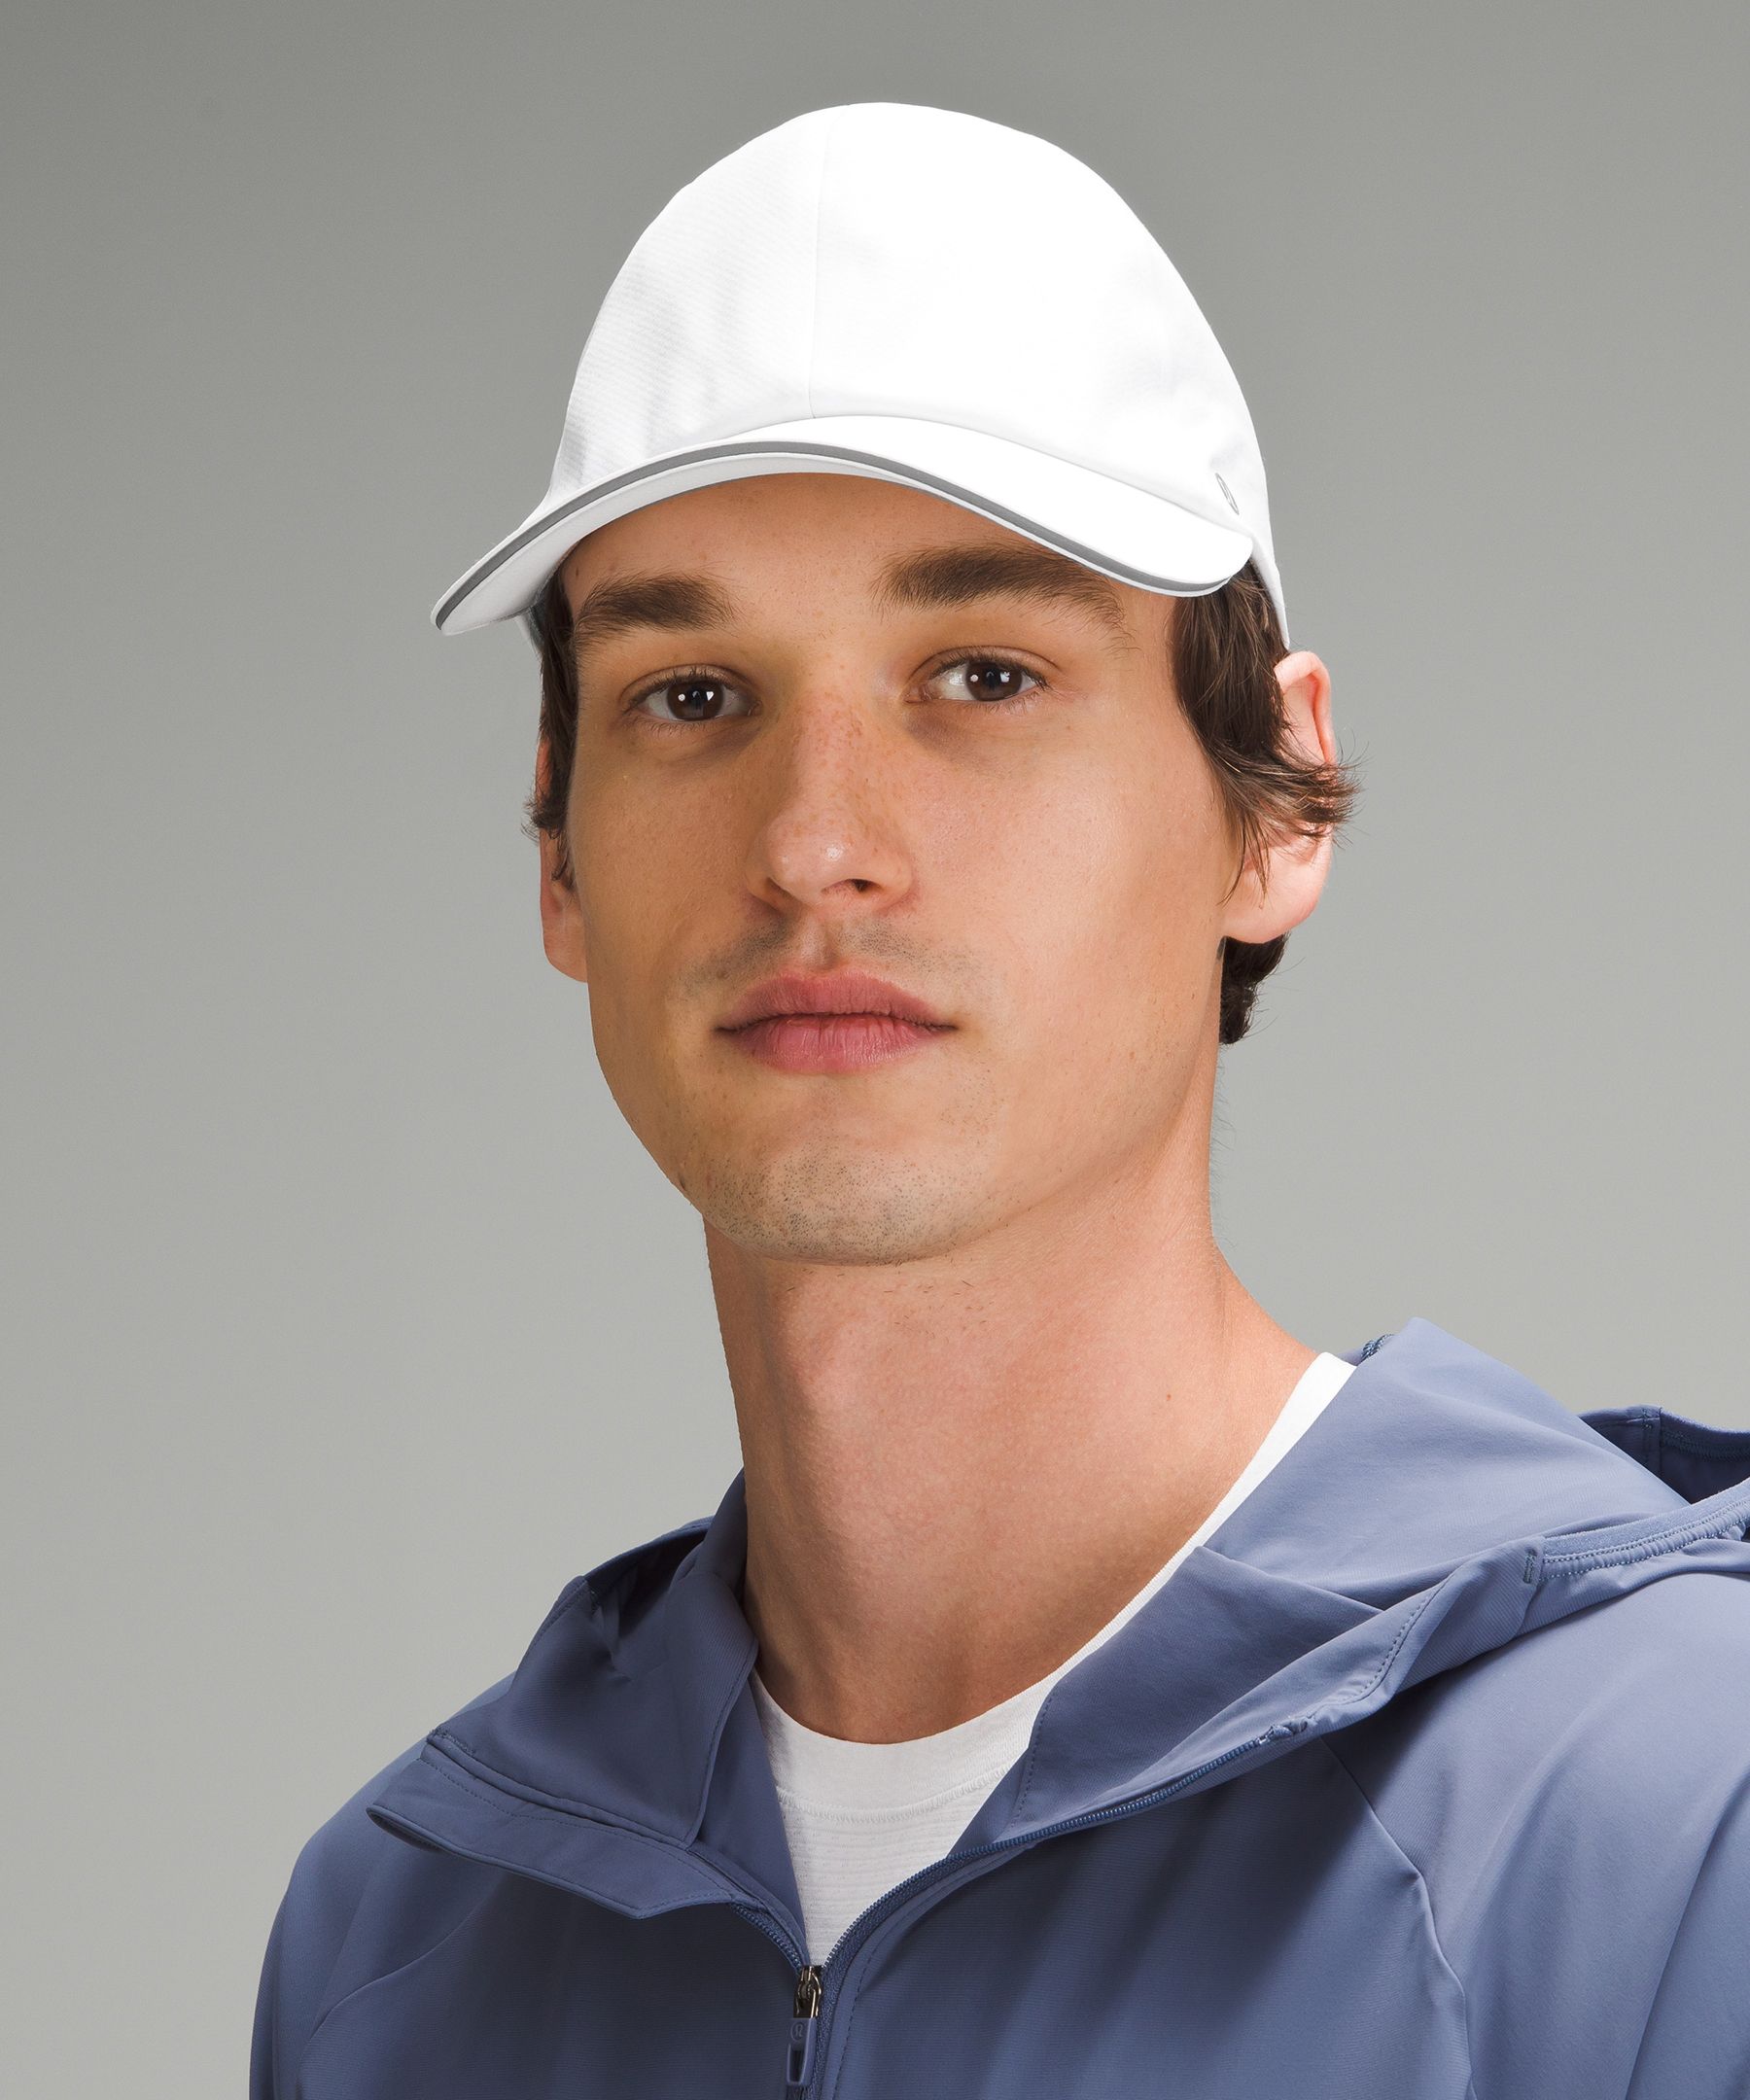 Buy White Quick Dry Activewear Cap for Men